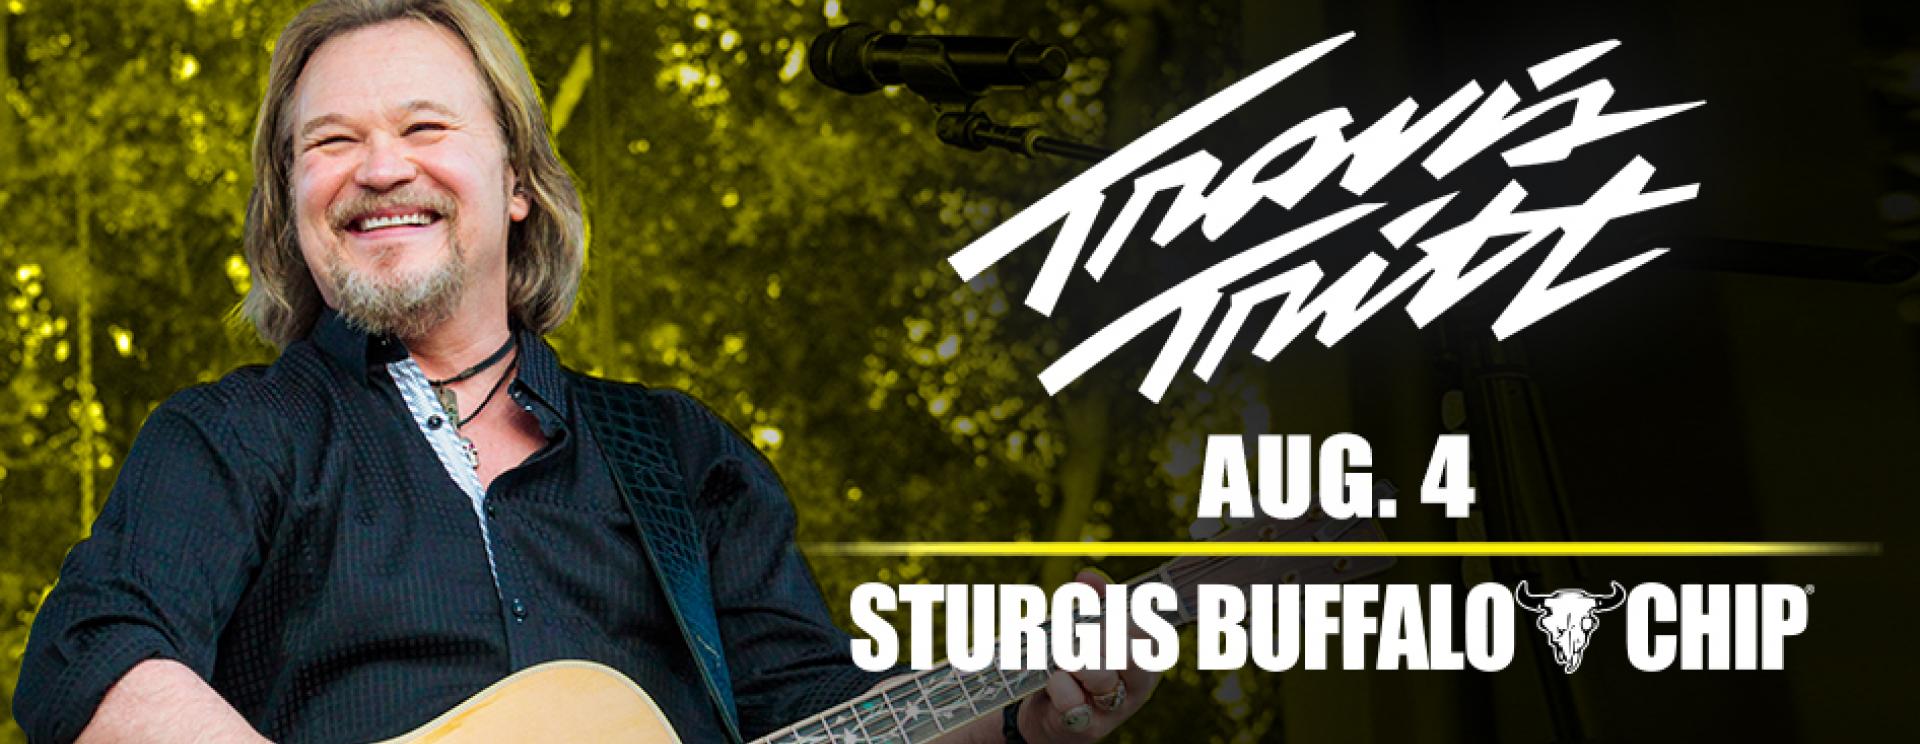 Travis Tritt at the Sturgis Buffalo Chip